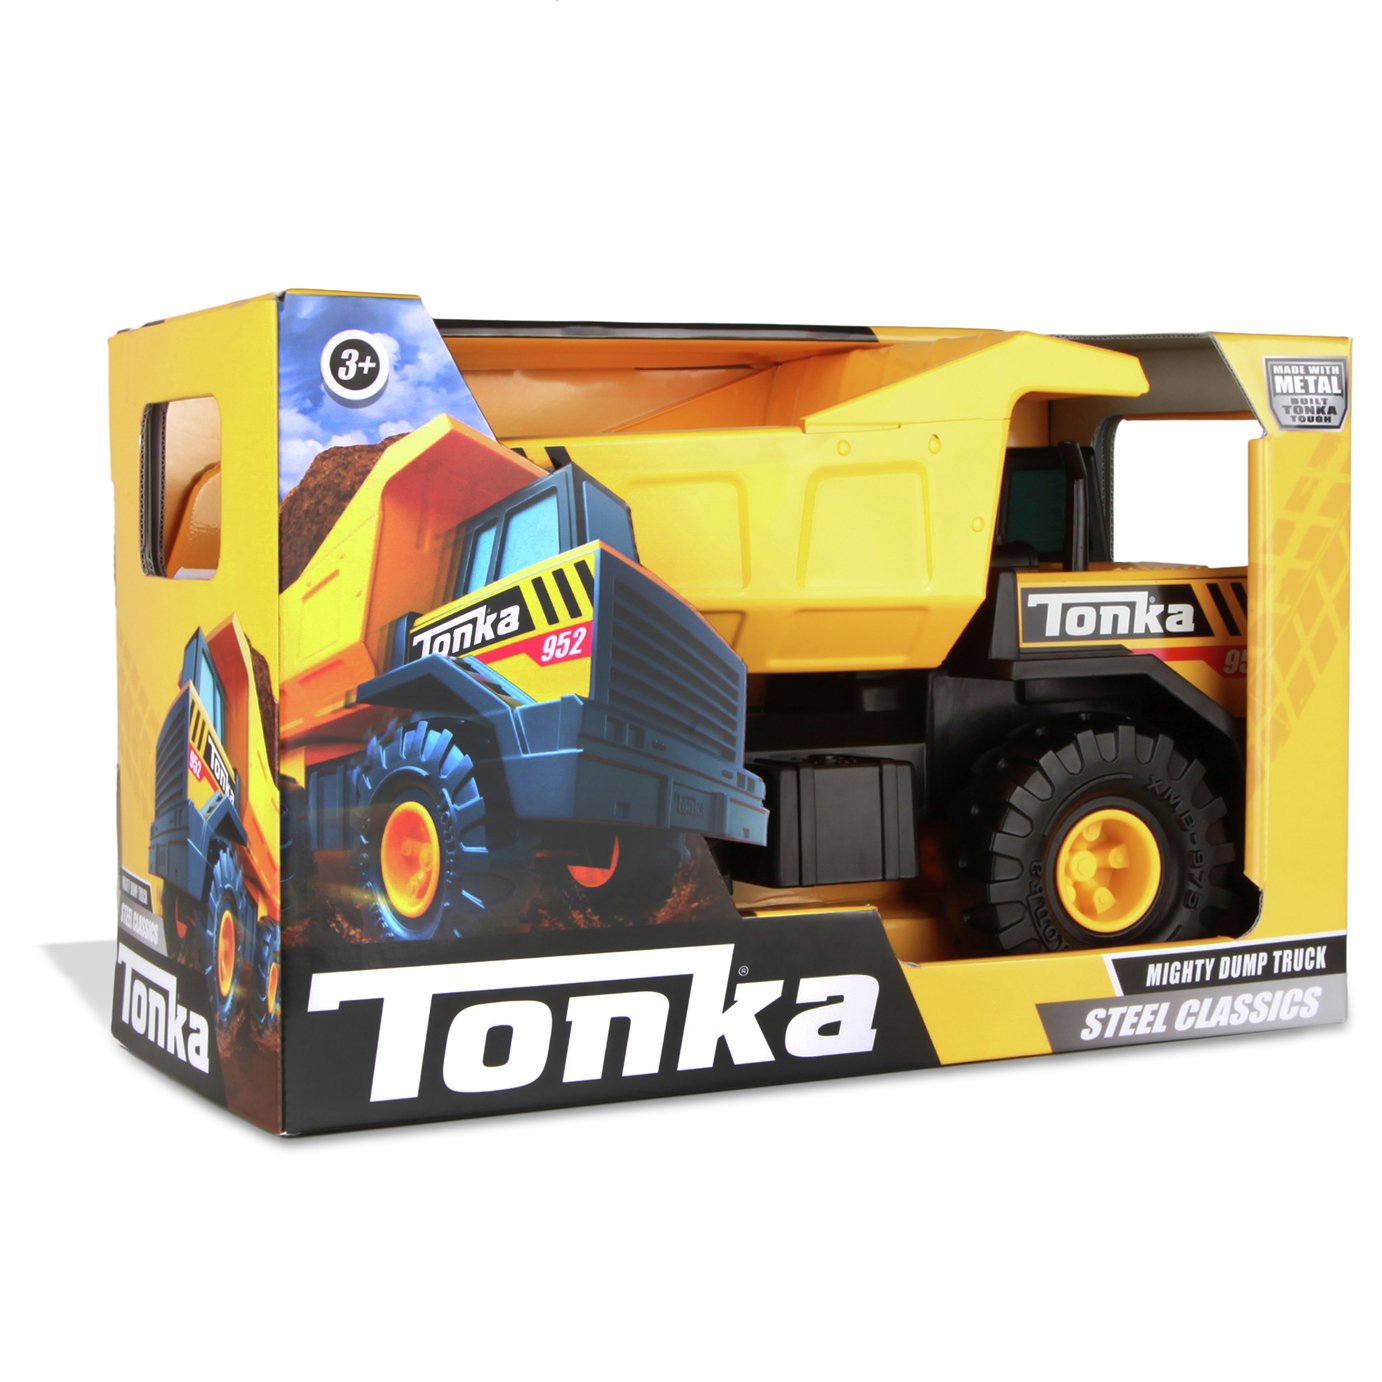 Tonka Steel Classics Mighty Dump Truck Review